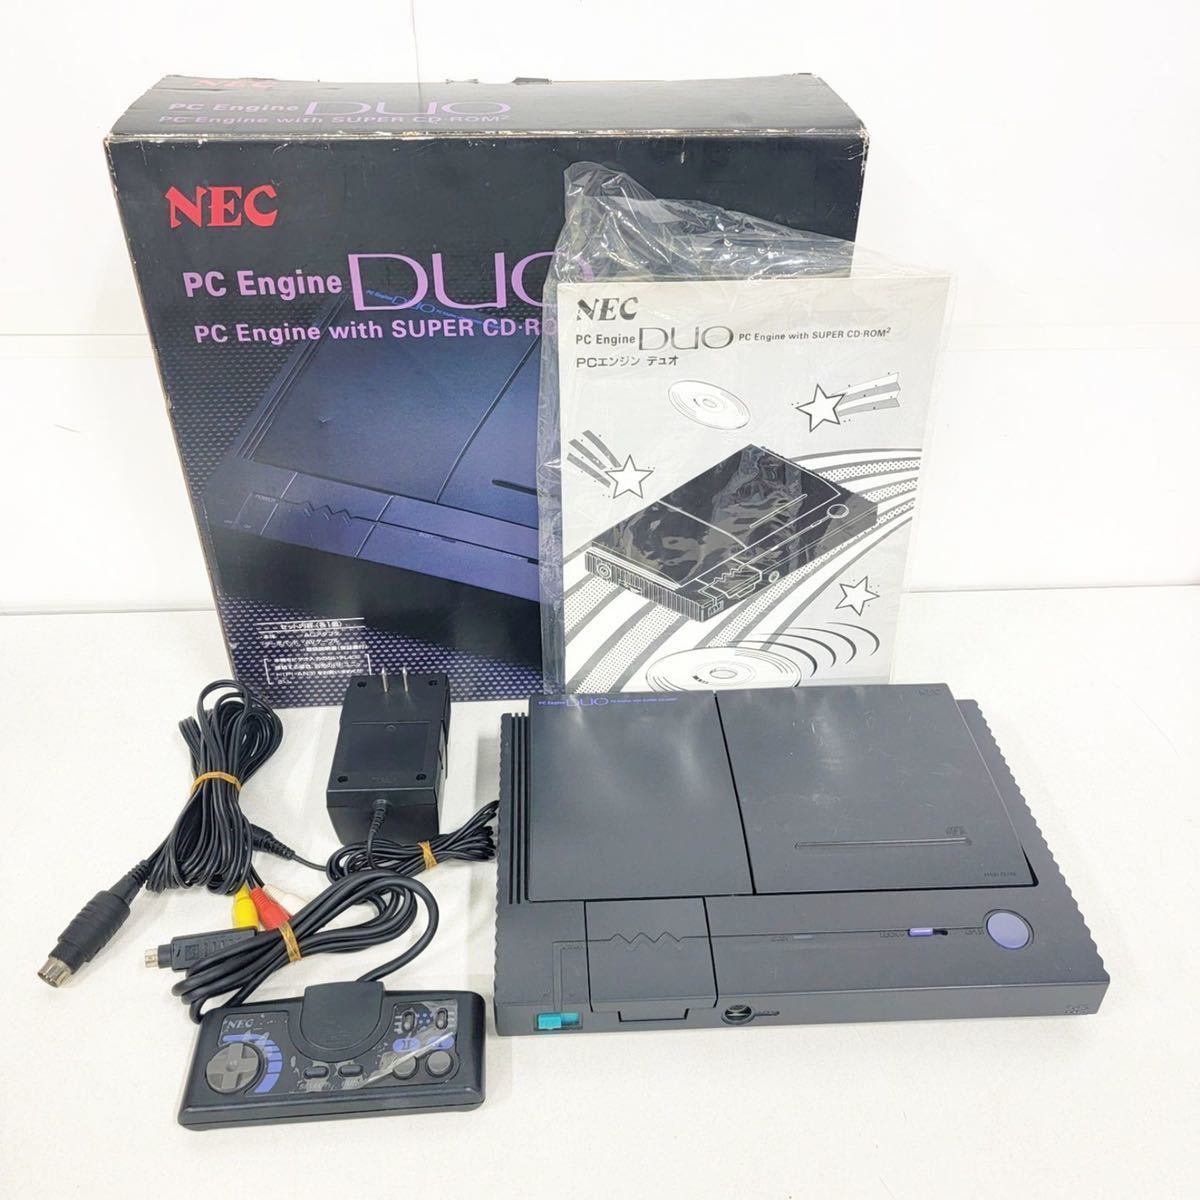 NEC PCエンジン DUO PI-TG8 / PC Engine SUPER CD-ROM2 レトロゲーム